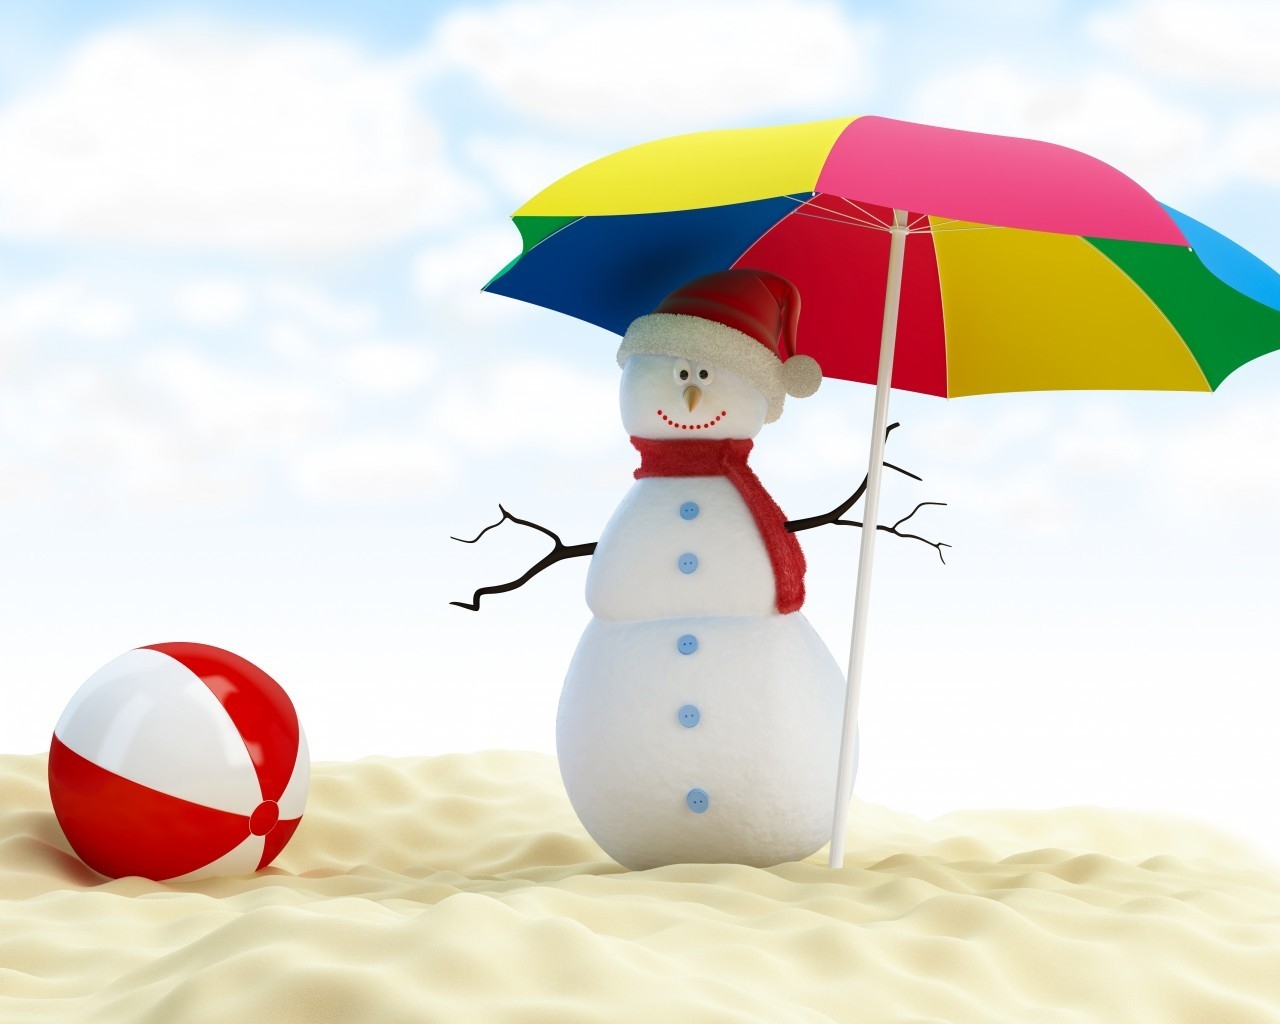 Summer Snowman for 1280 x 1024 resolution